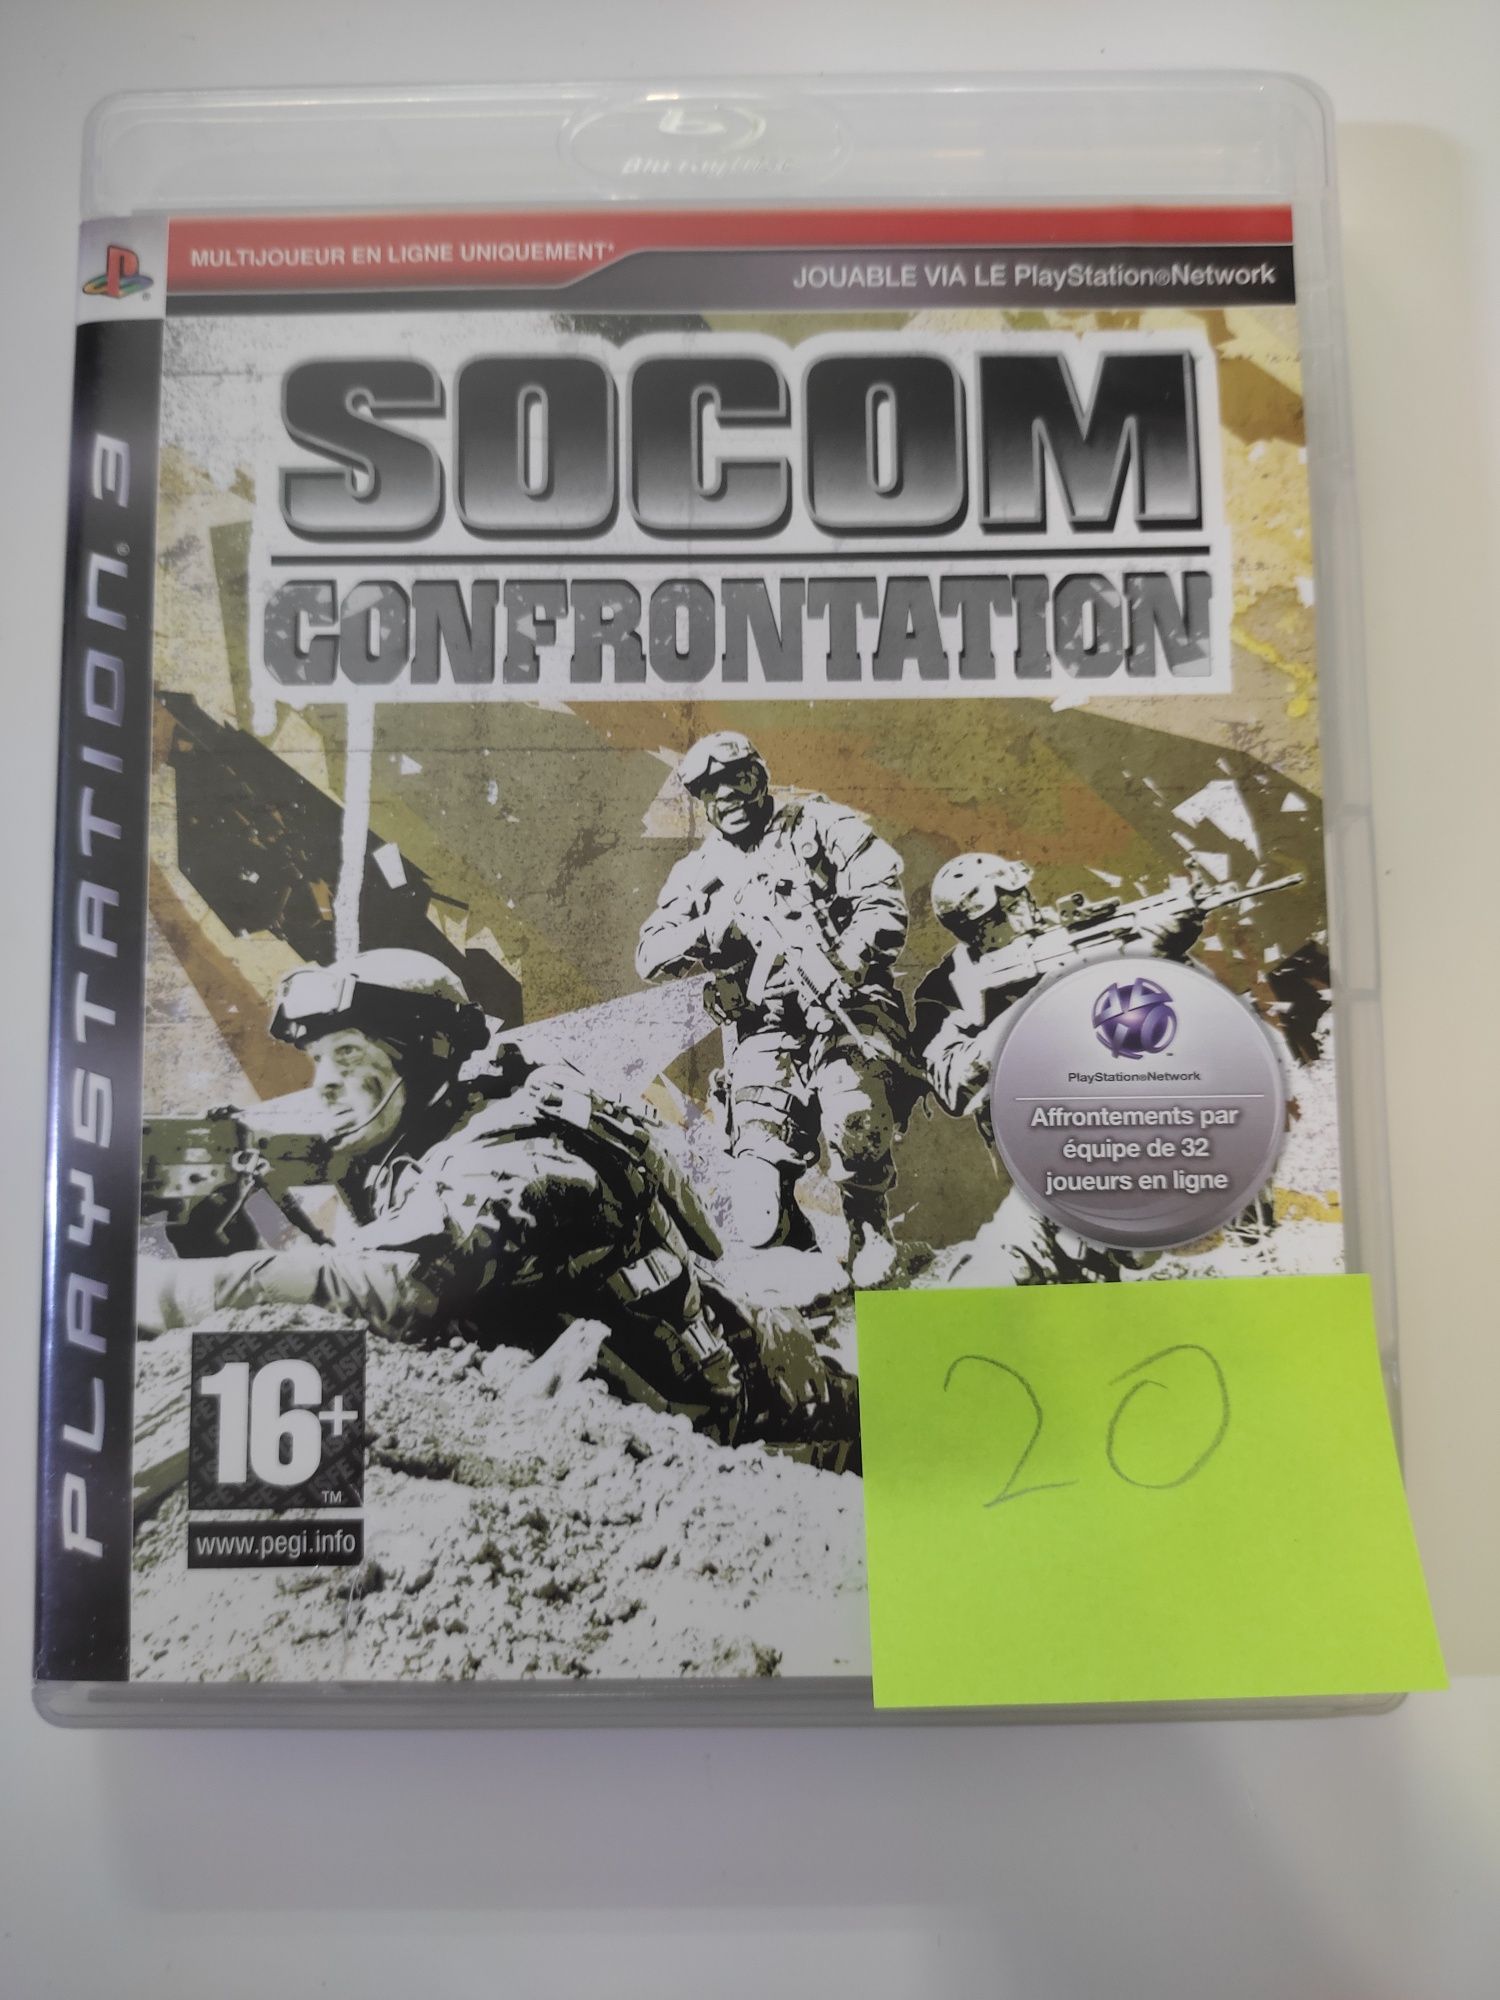 Socom comfrontation PS3 PlayStation3